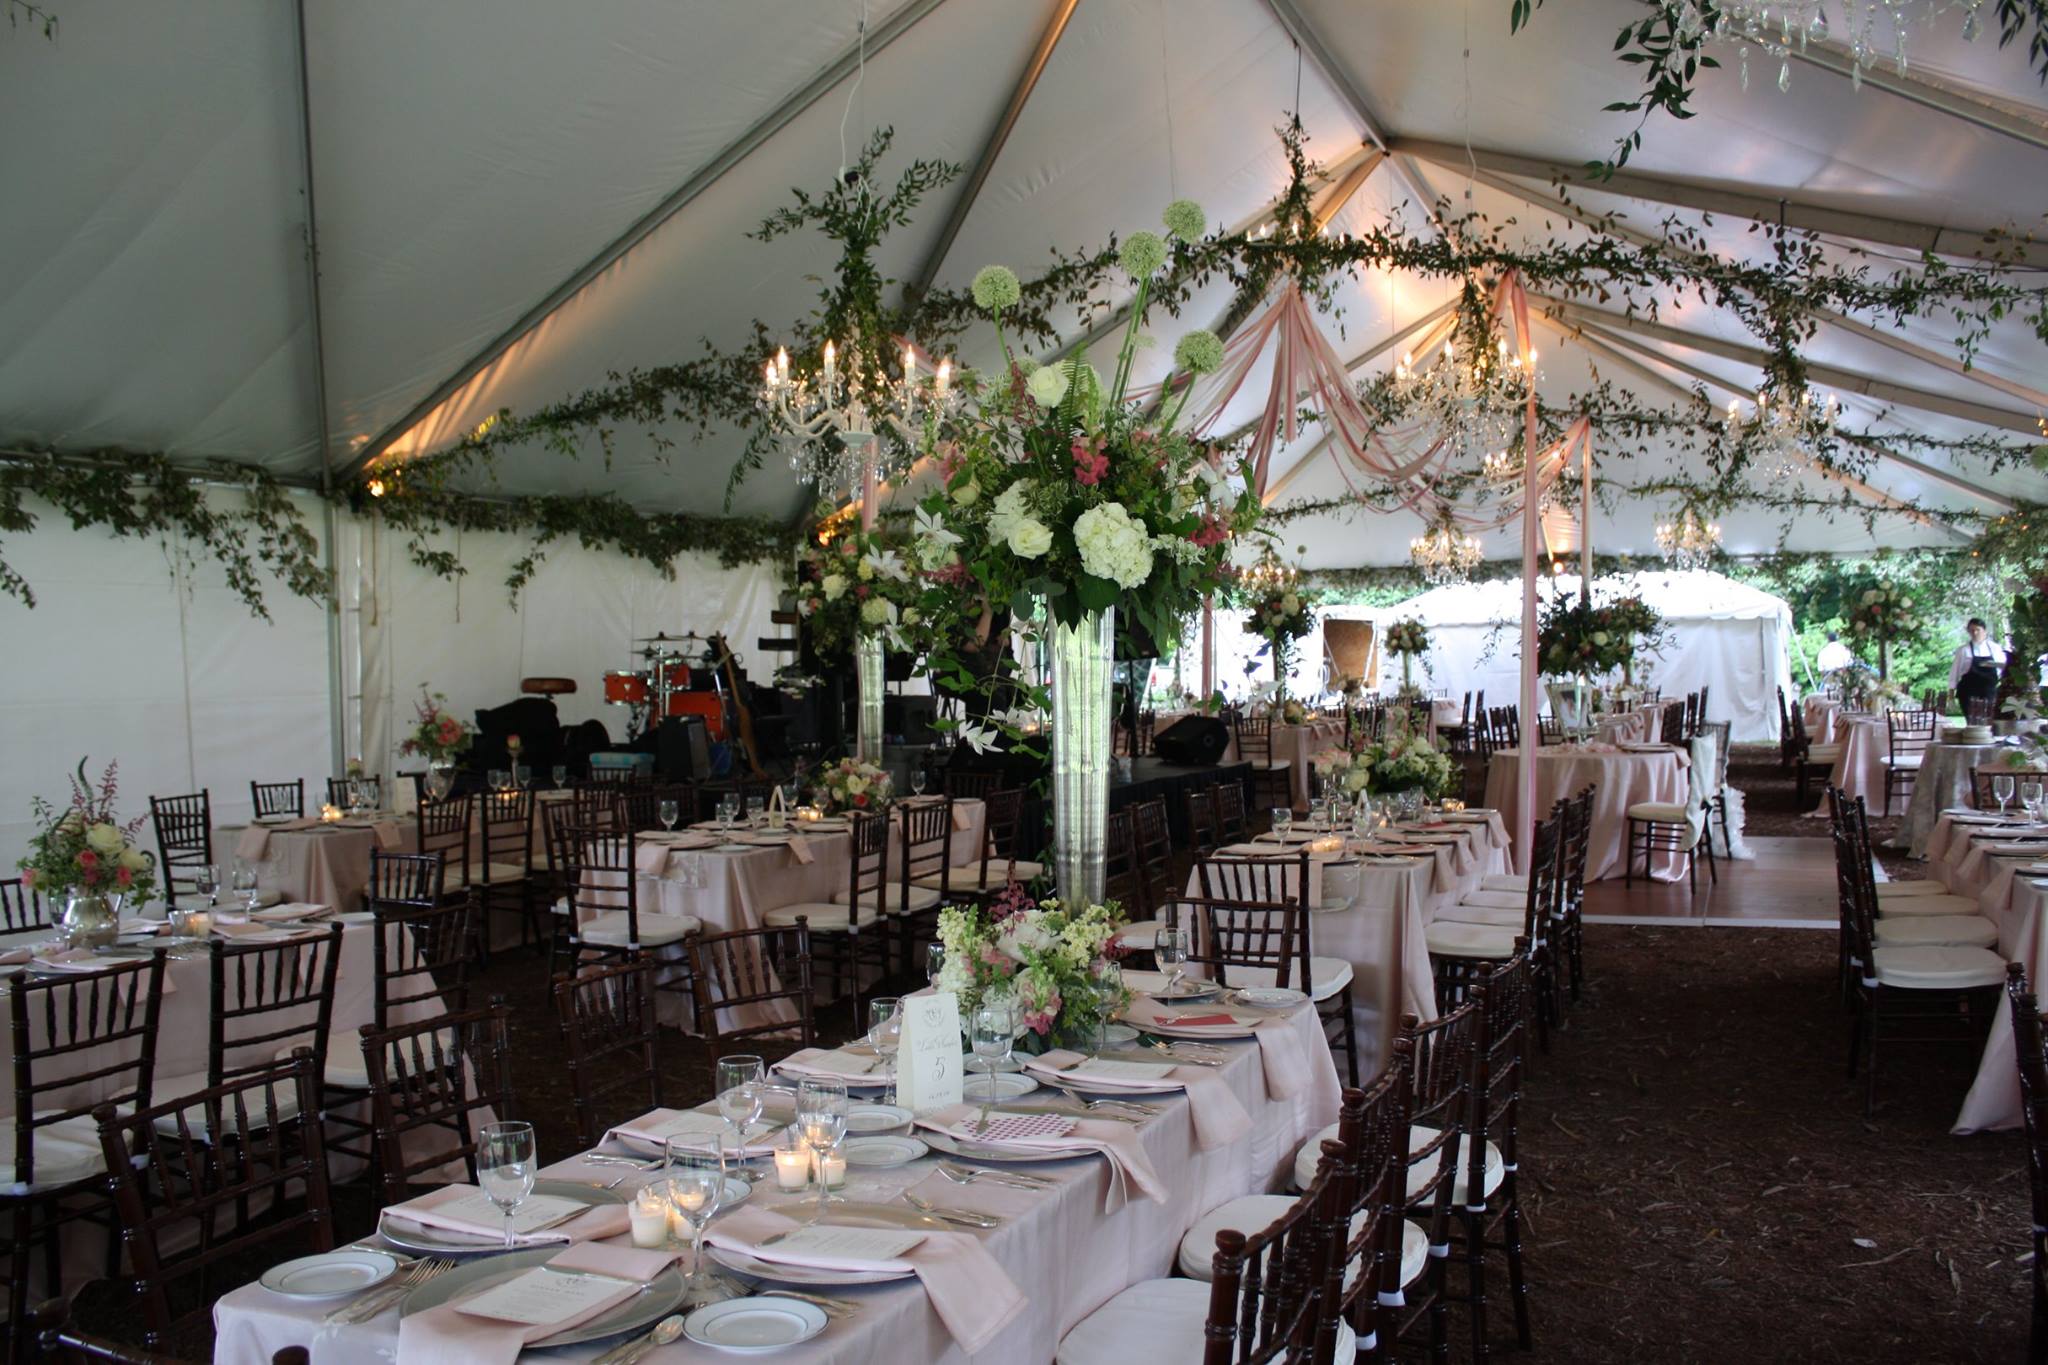 dining reception inside tent at a wedding venue in central arkansas